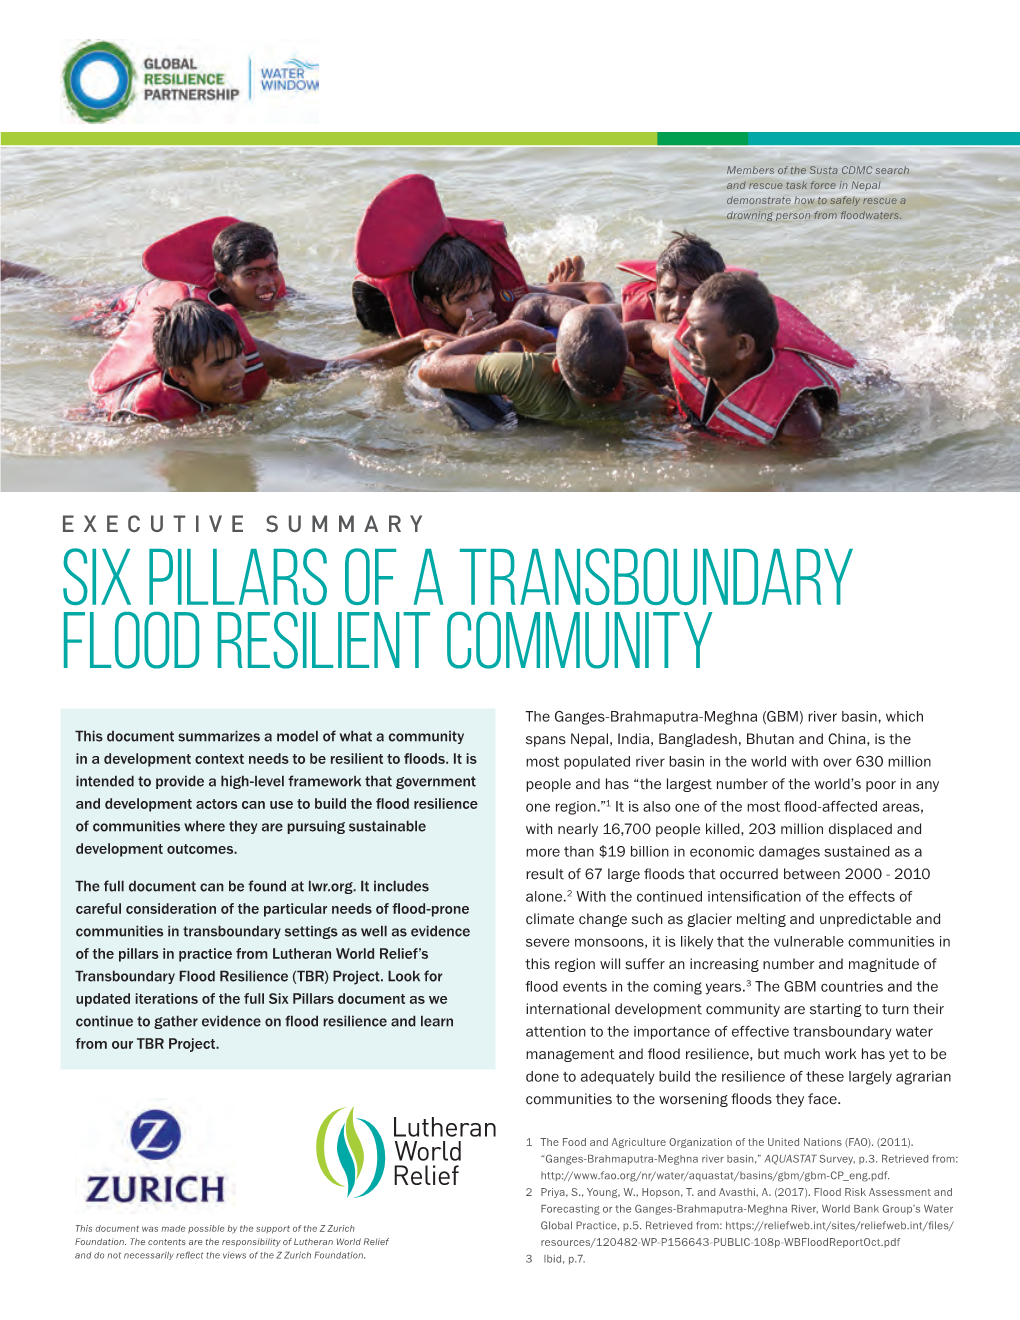 Six Pillars of a Transboundary Flood Resilient Community